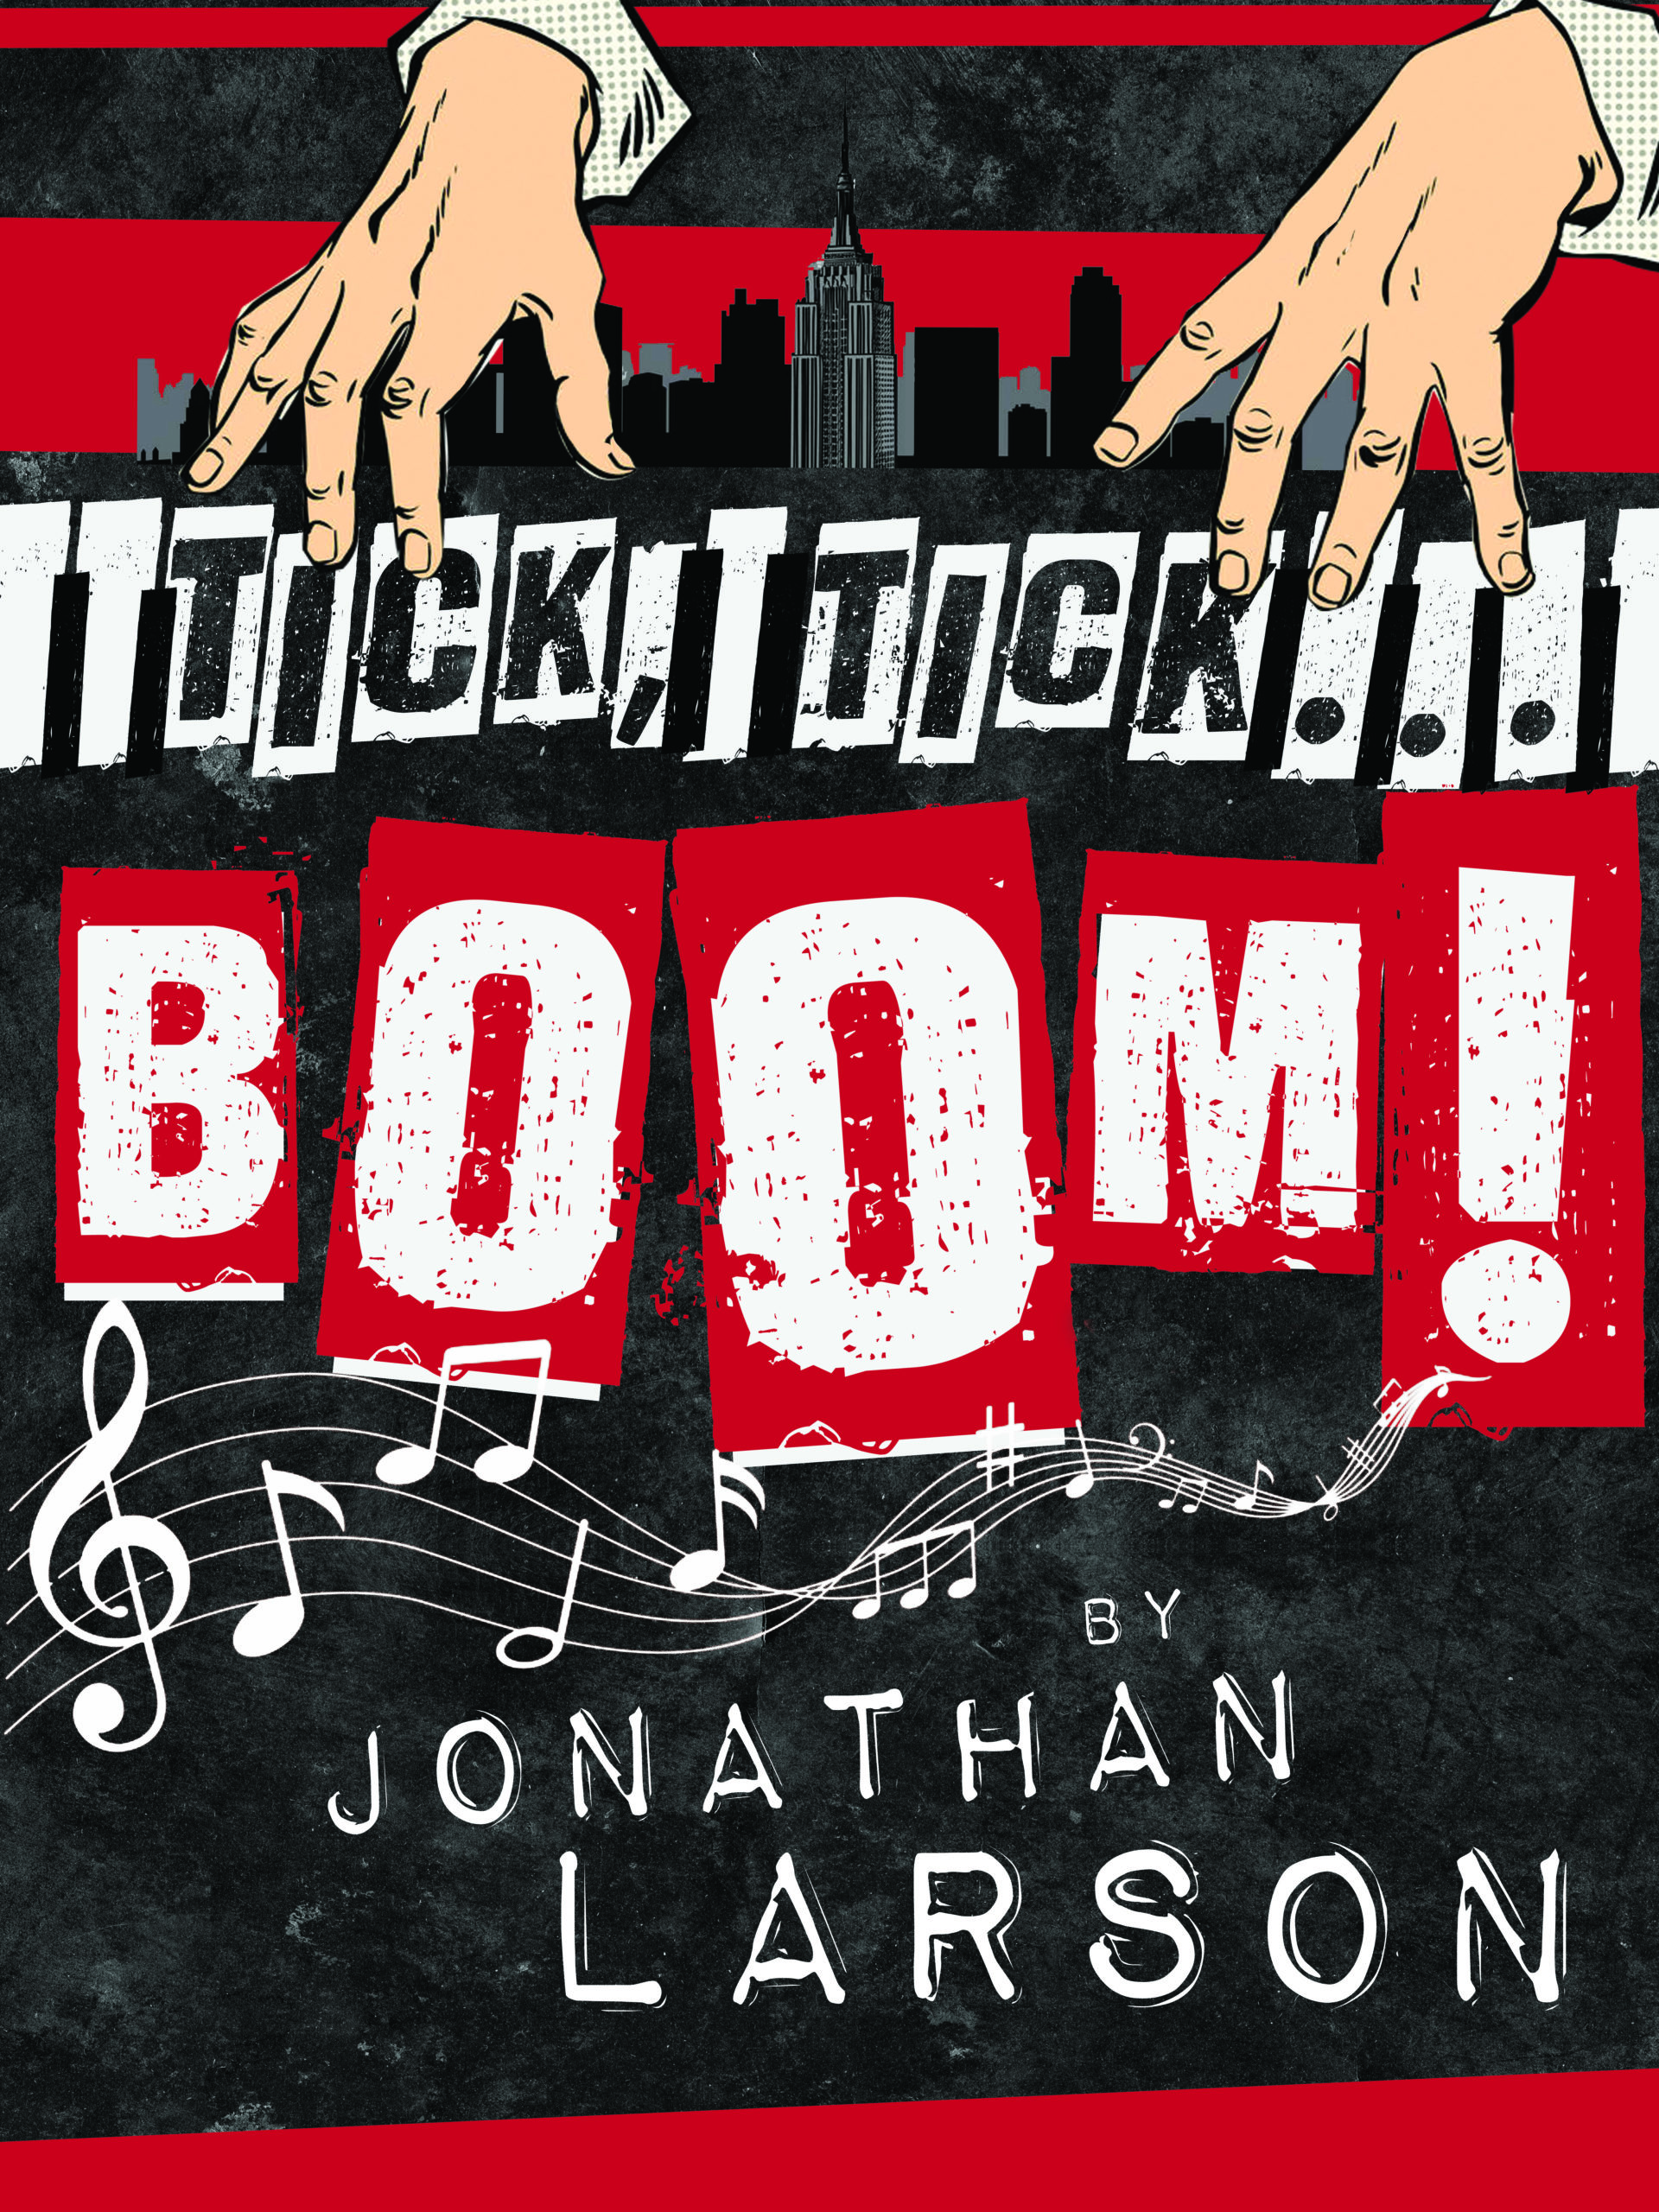 tick tick boom by Jonathan Larson at International City Theatre